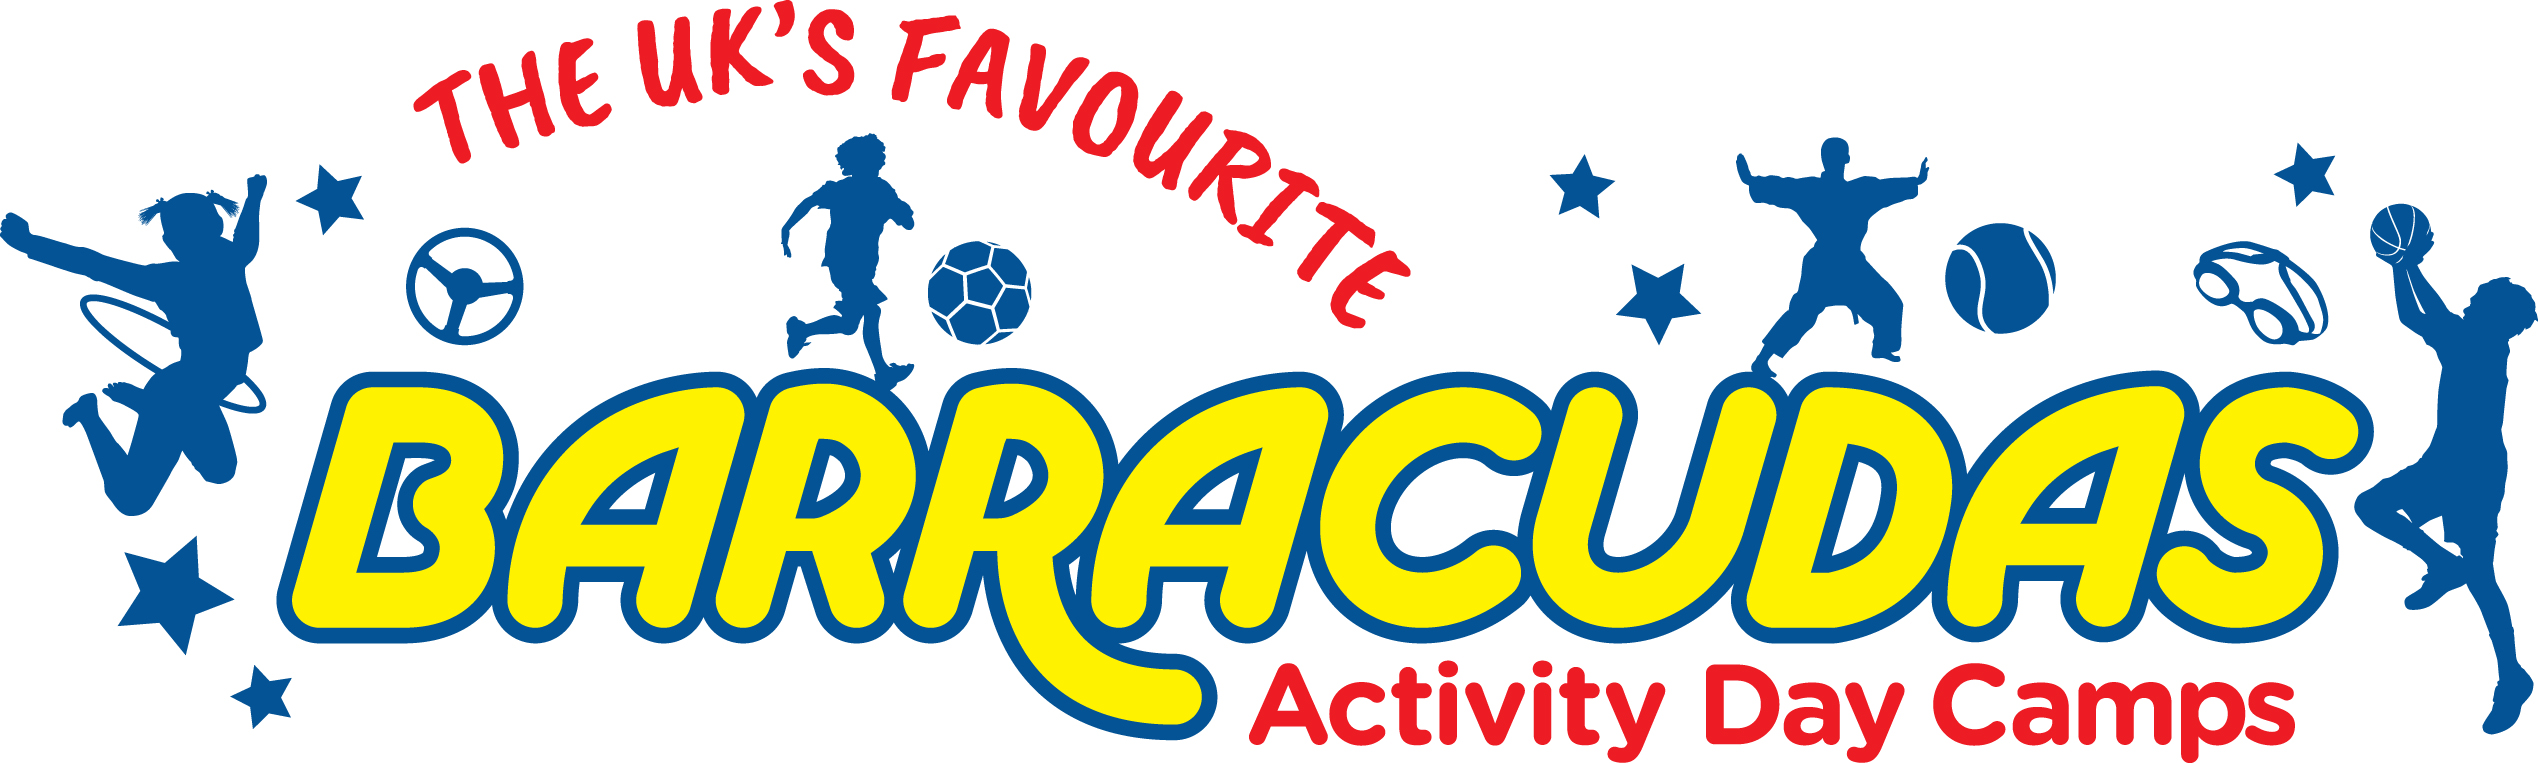 Barracudas activity day camp logo